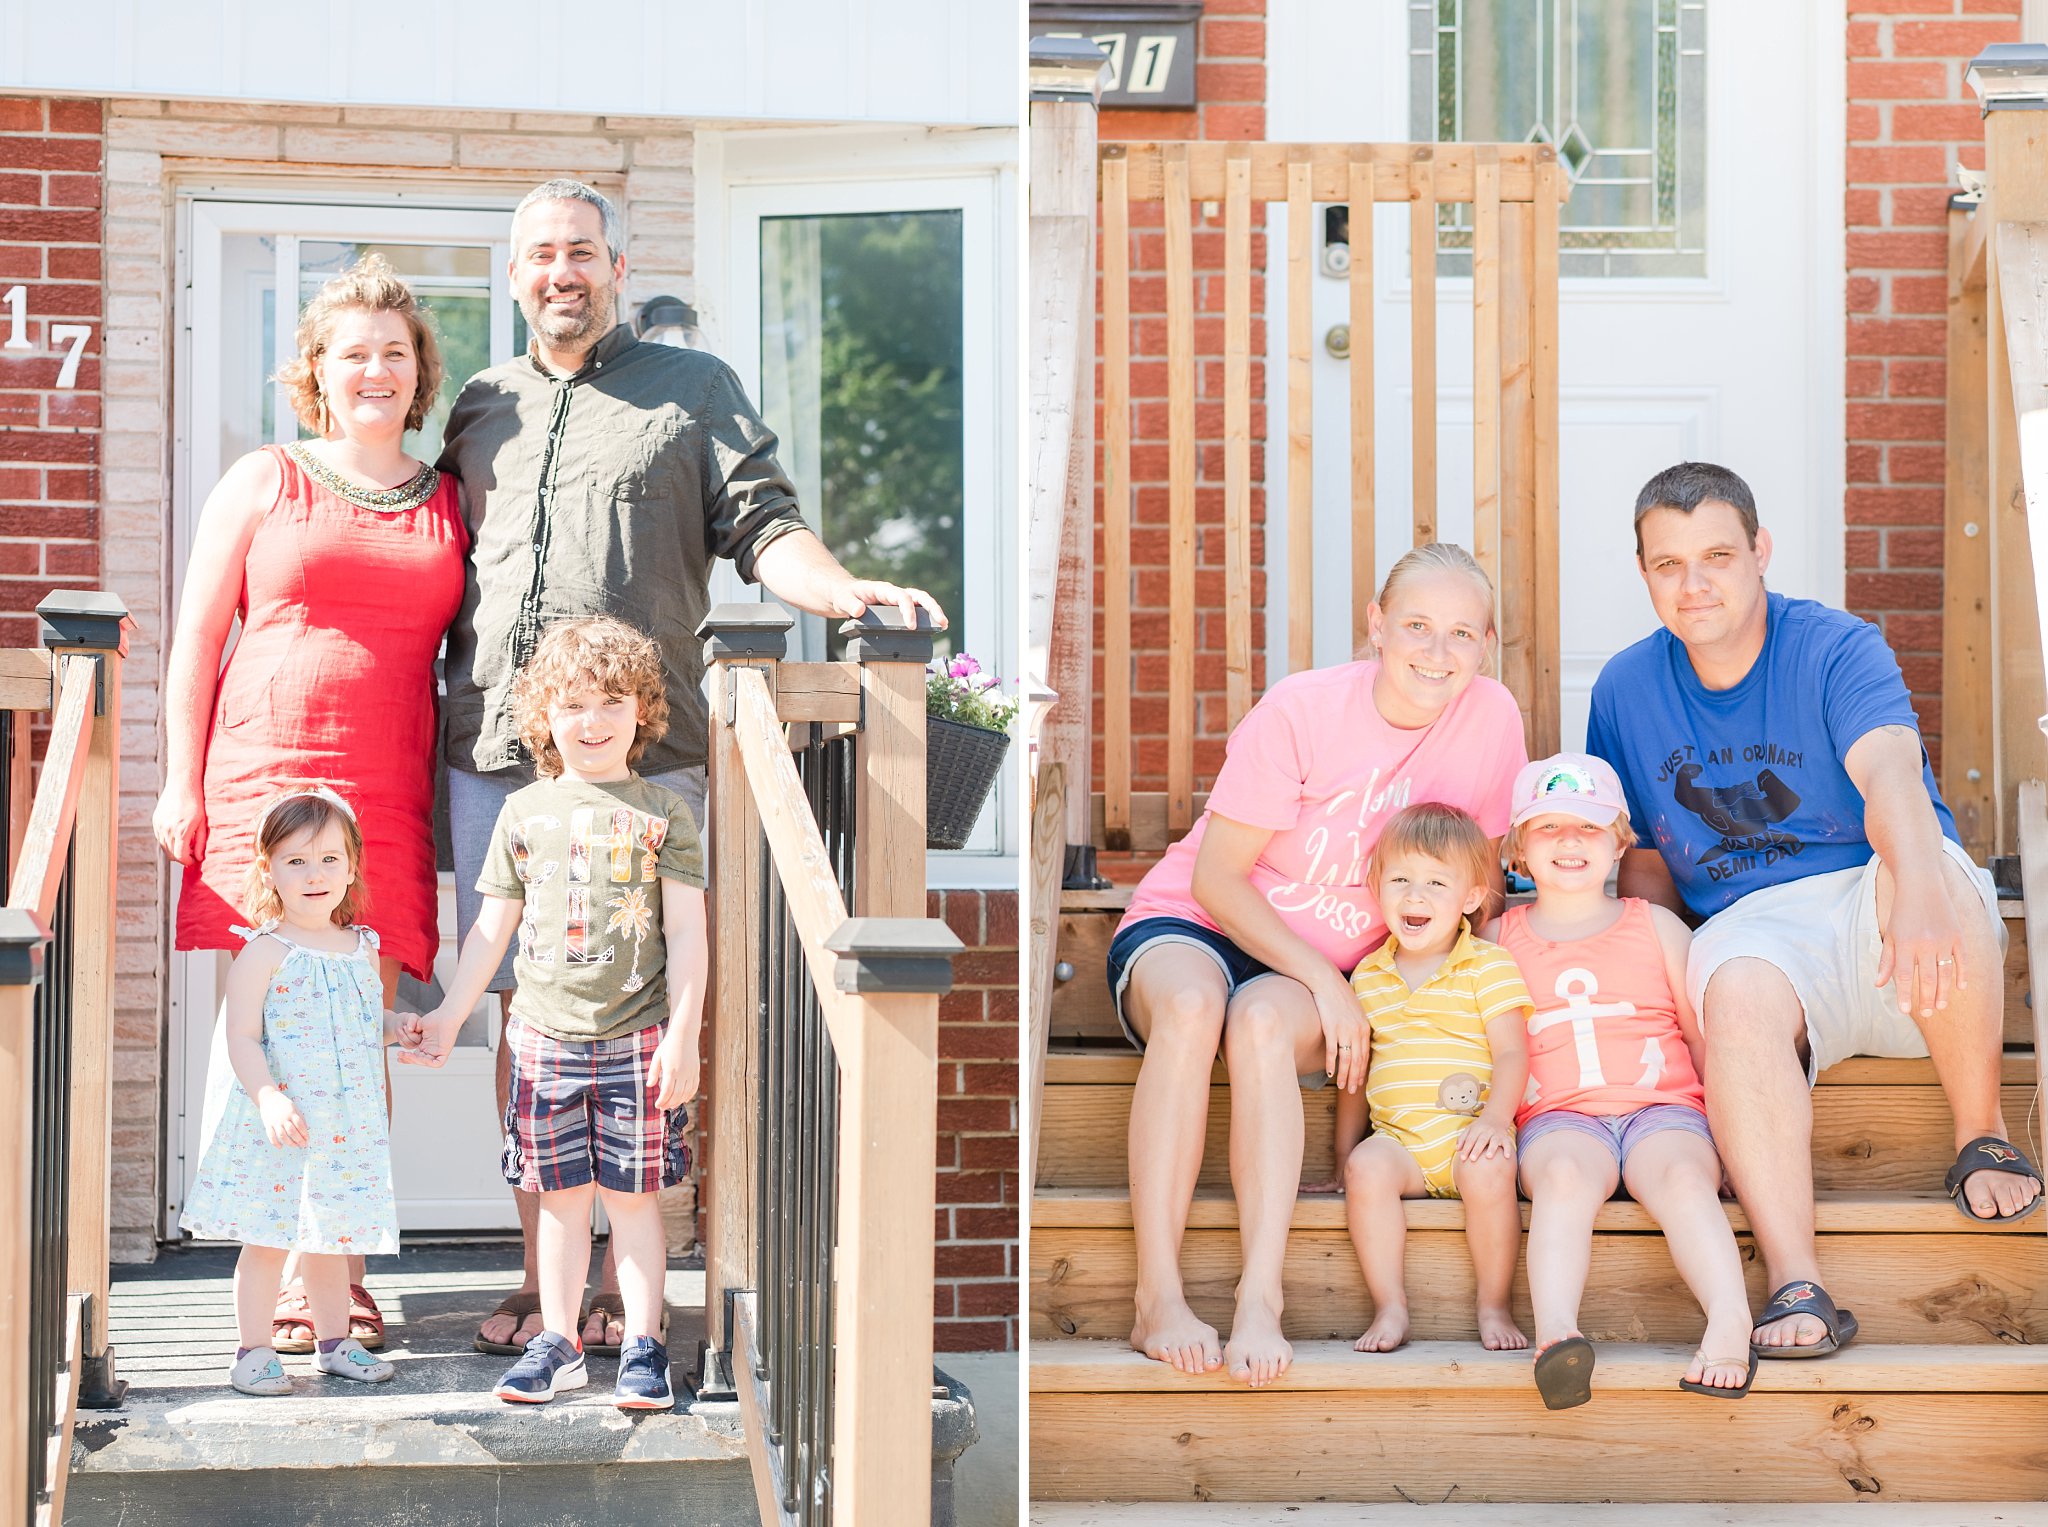 family photos in london ontario; families on their porches